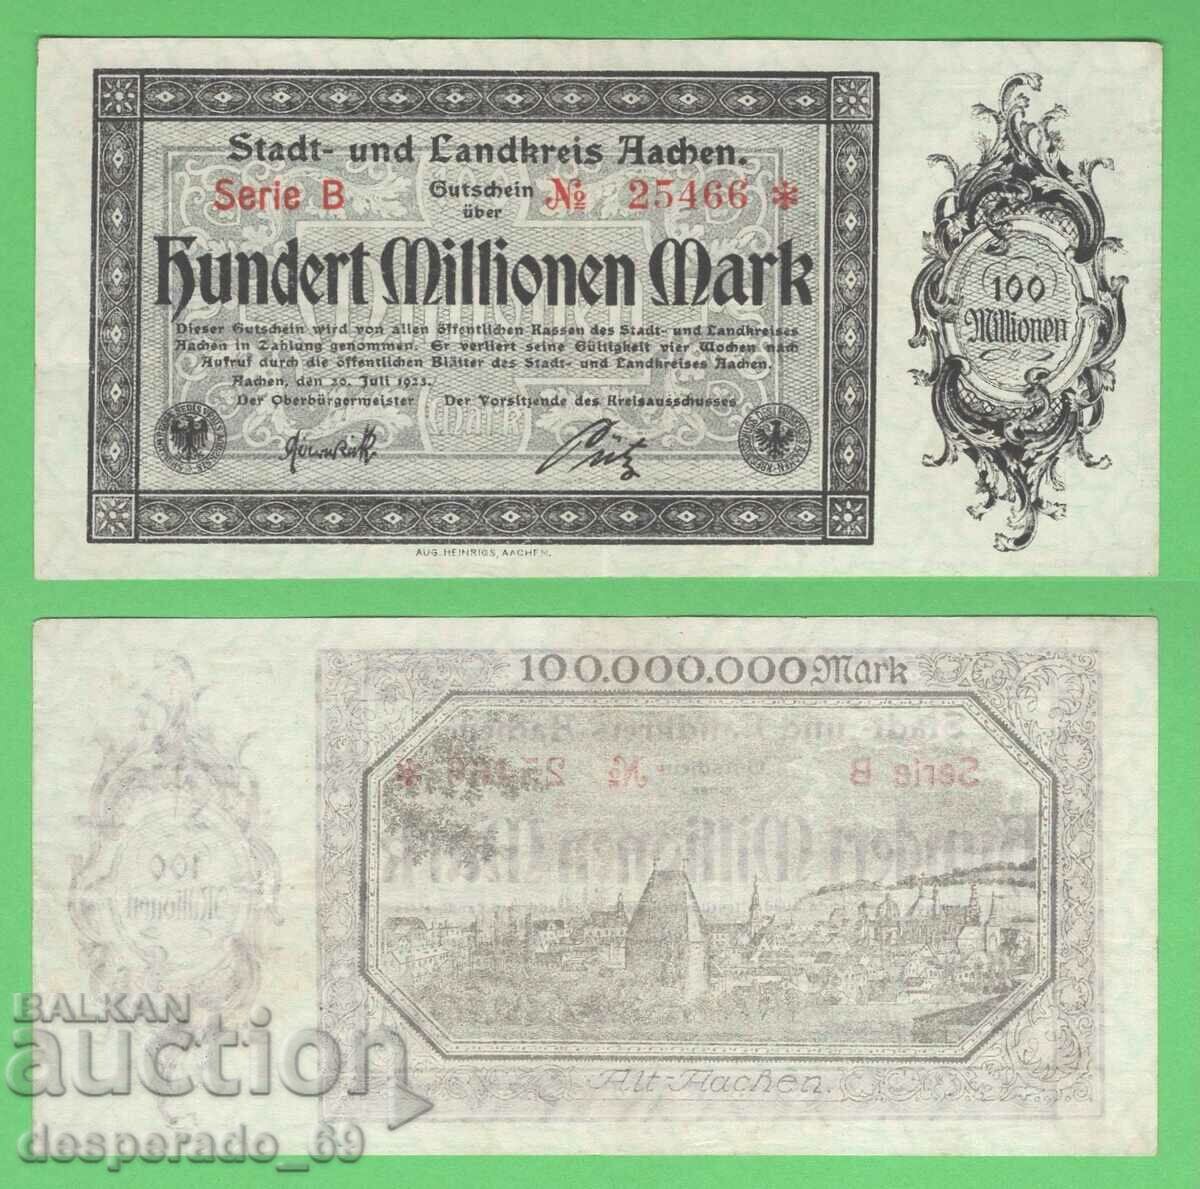 (¯`'•.¸ГЕРМАНИЯ (Aachen) 100 милиона марки 1923 aUNC¸.•'´¯)